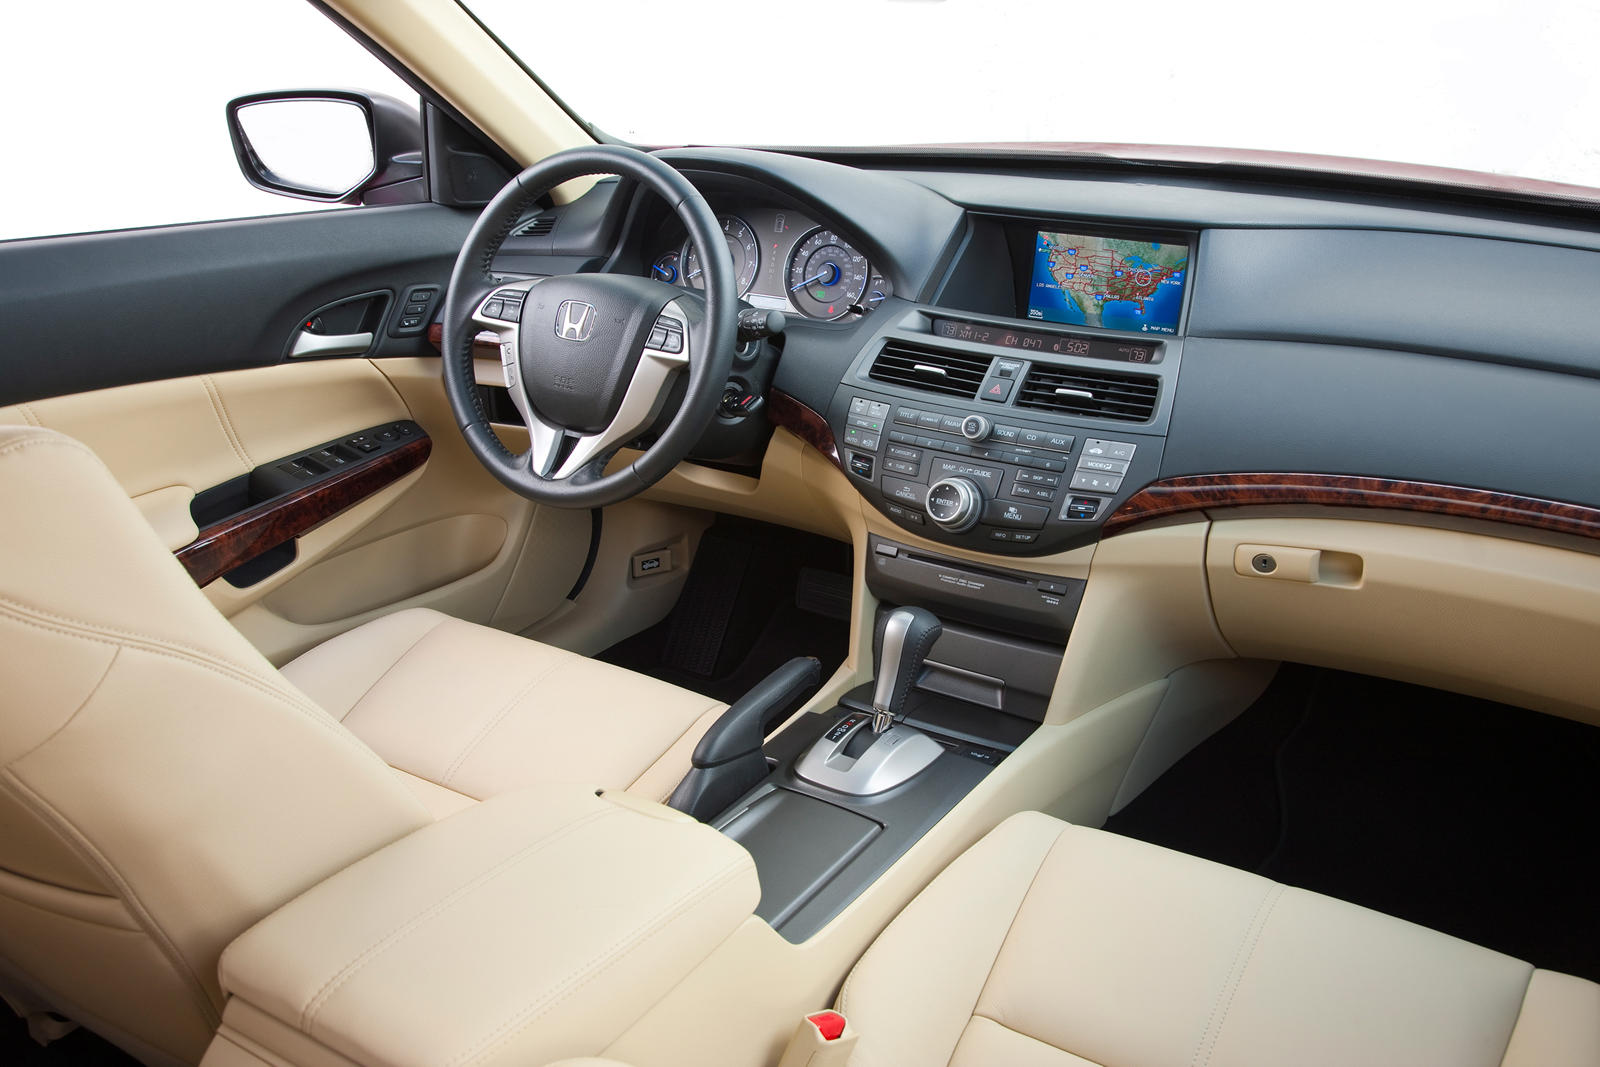 2011 Honda Accord Crosstour Review Trims Specs Price New Interior